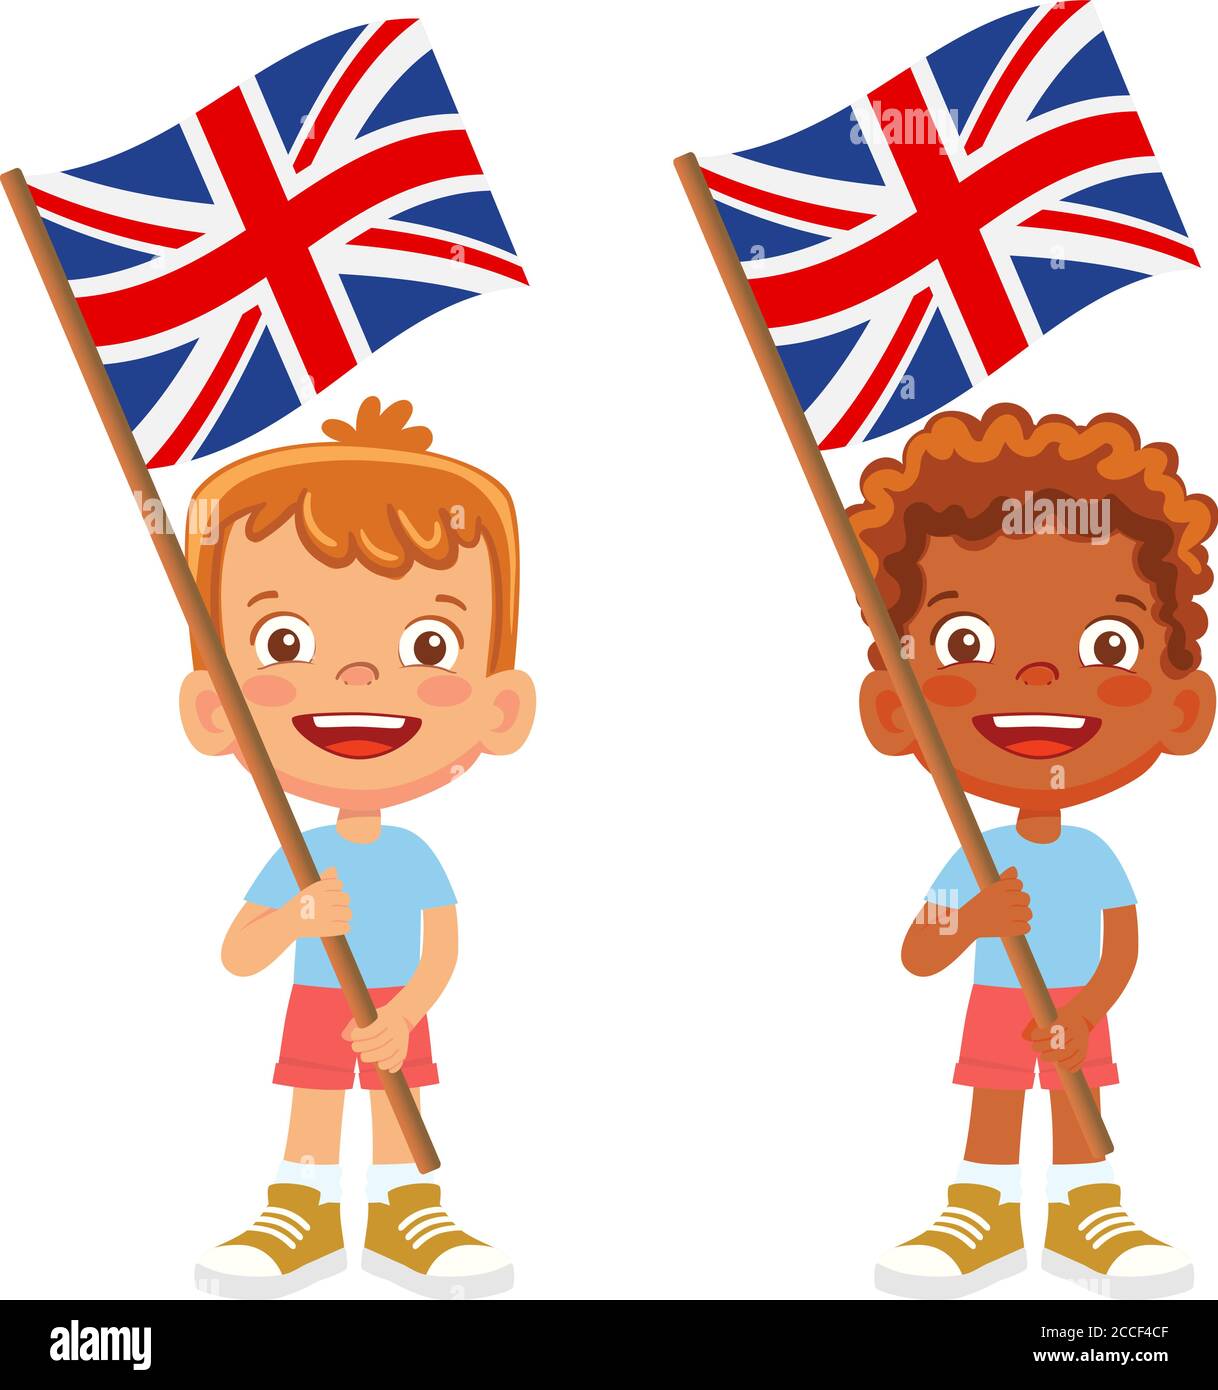 United Kingdom flag in hand. Children holding flag. National flag of United Kingdom vector Stock Vector